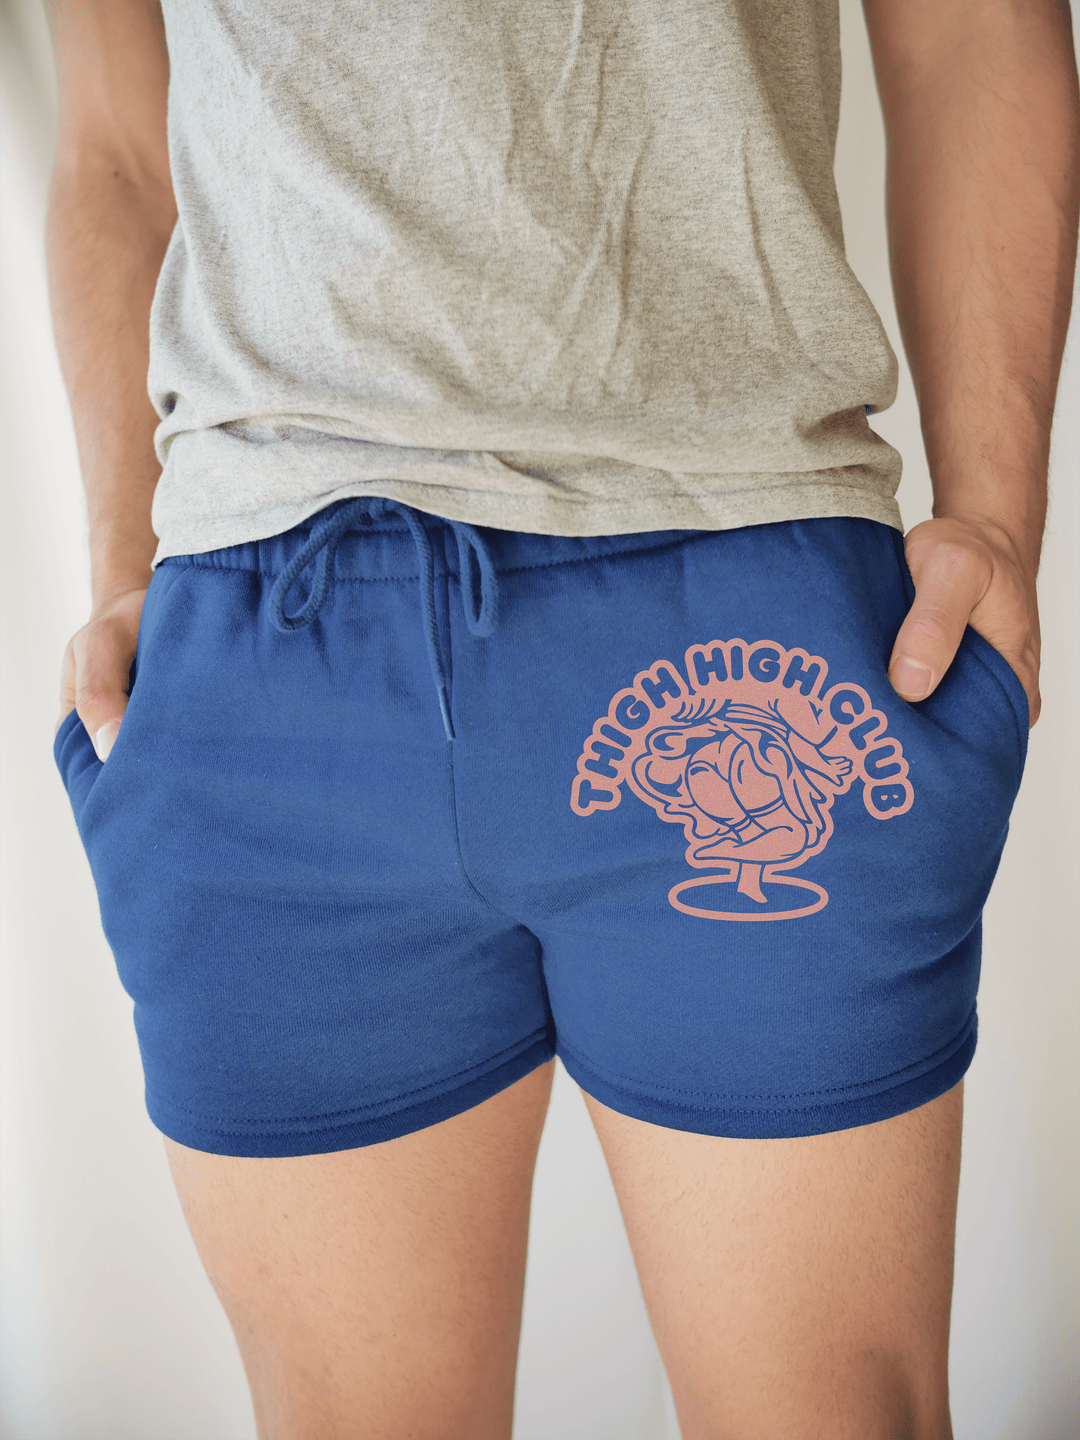 PixelThat Punderwear Shorts Royal Blue / S / Front Thigh High Club Men's Gym Shorts